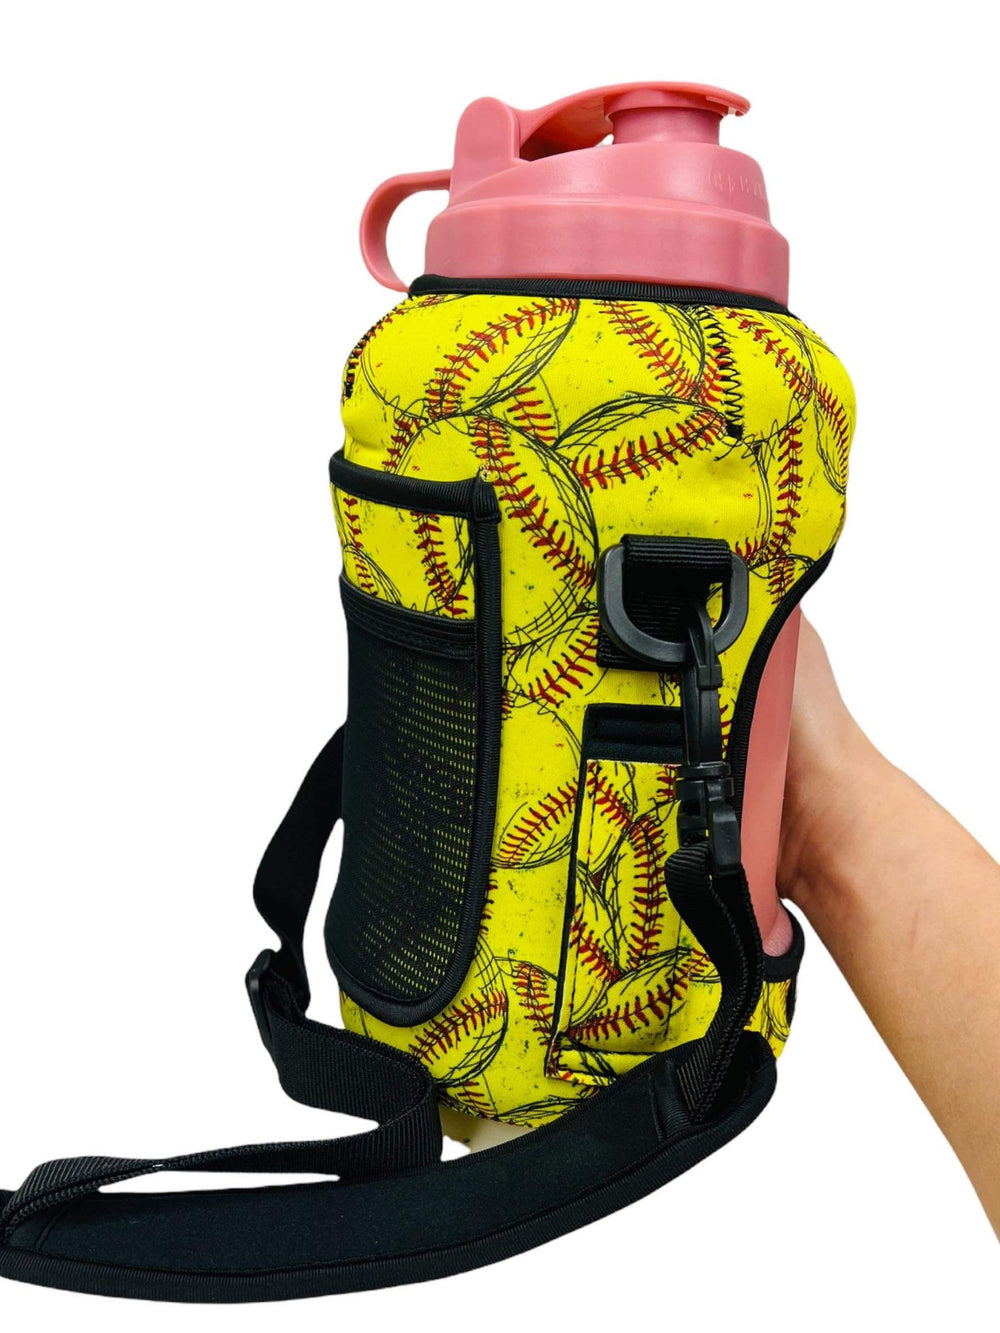 Softball 1/2 Gallon Jug Carrying Handler™